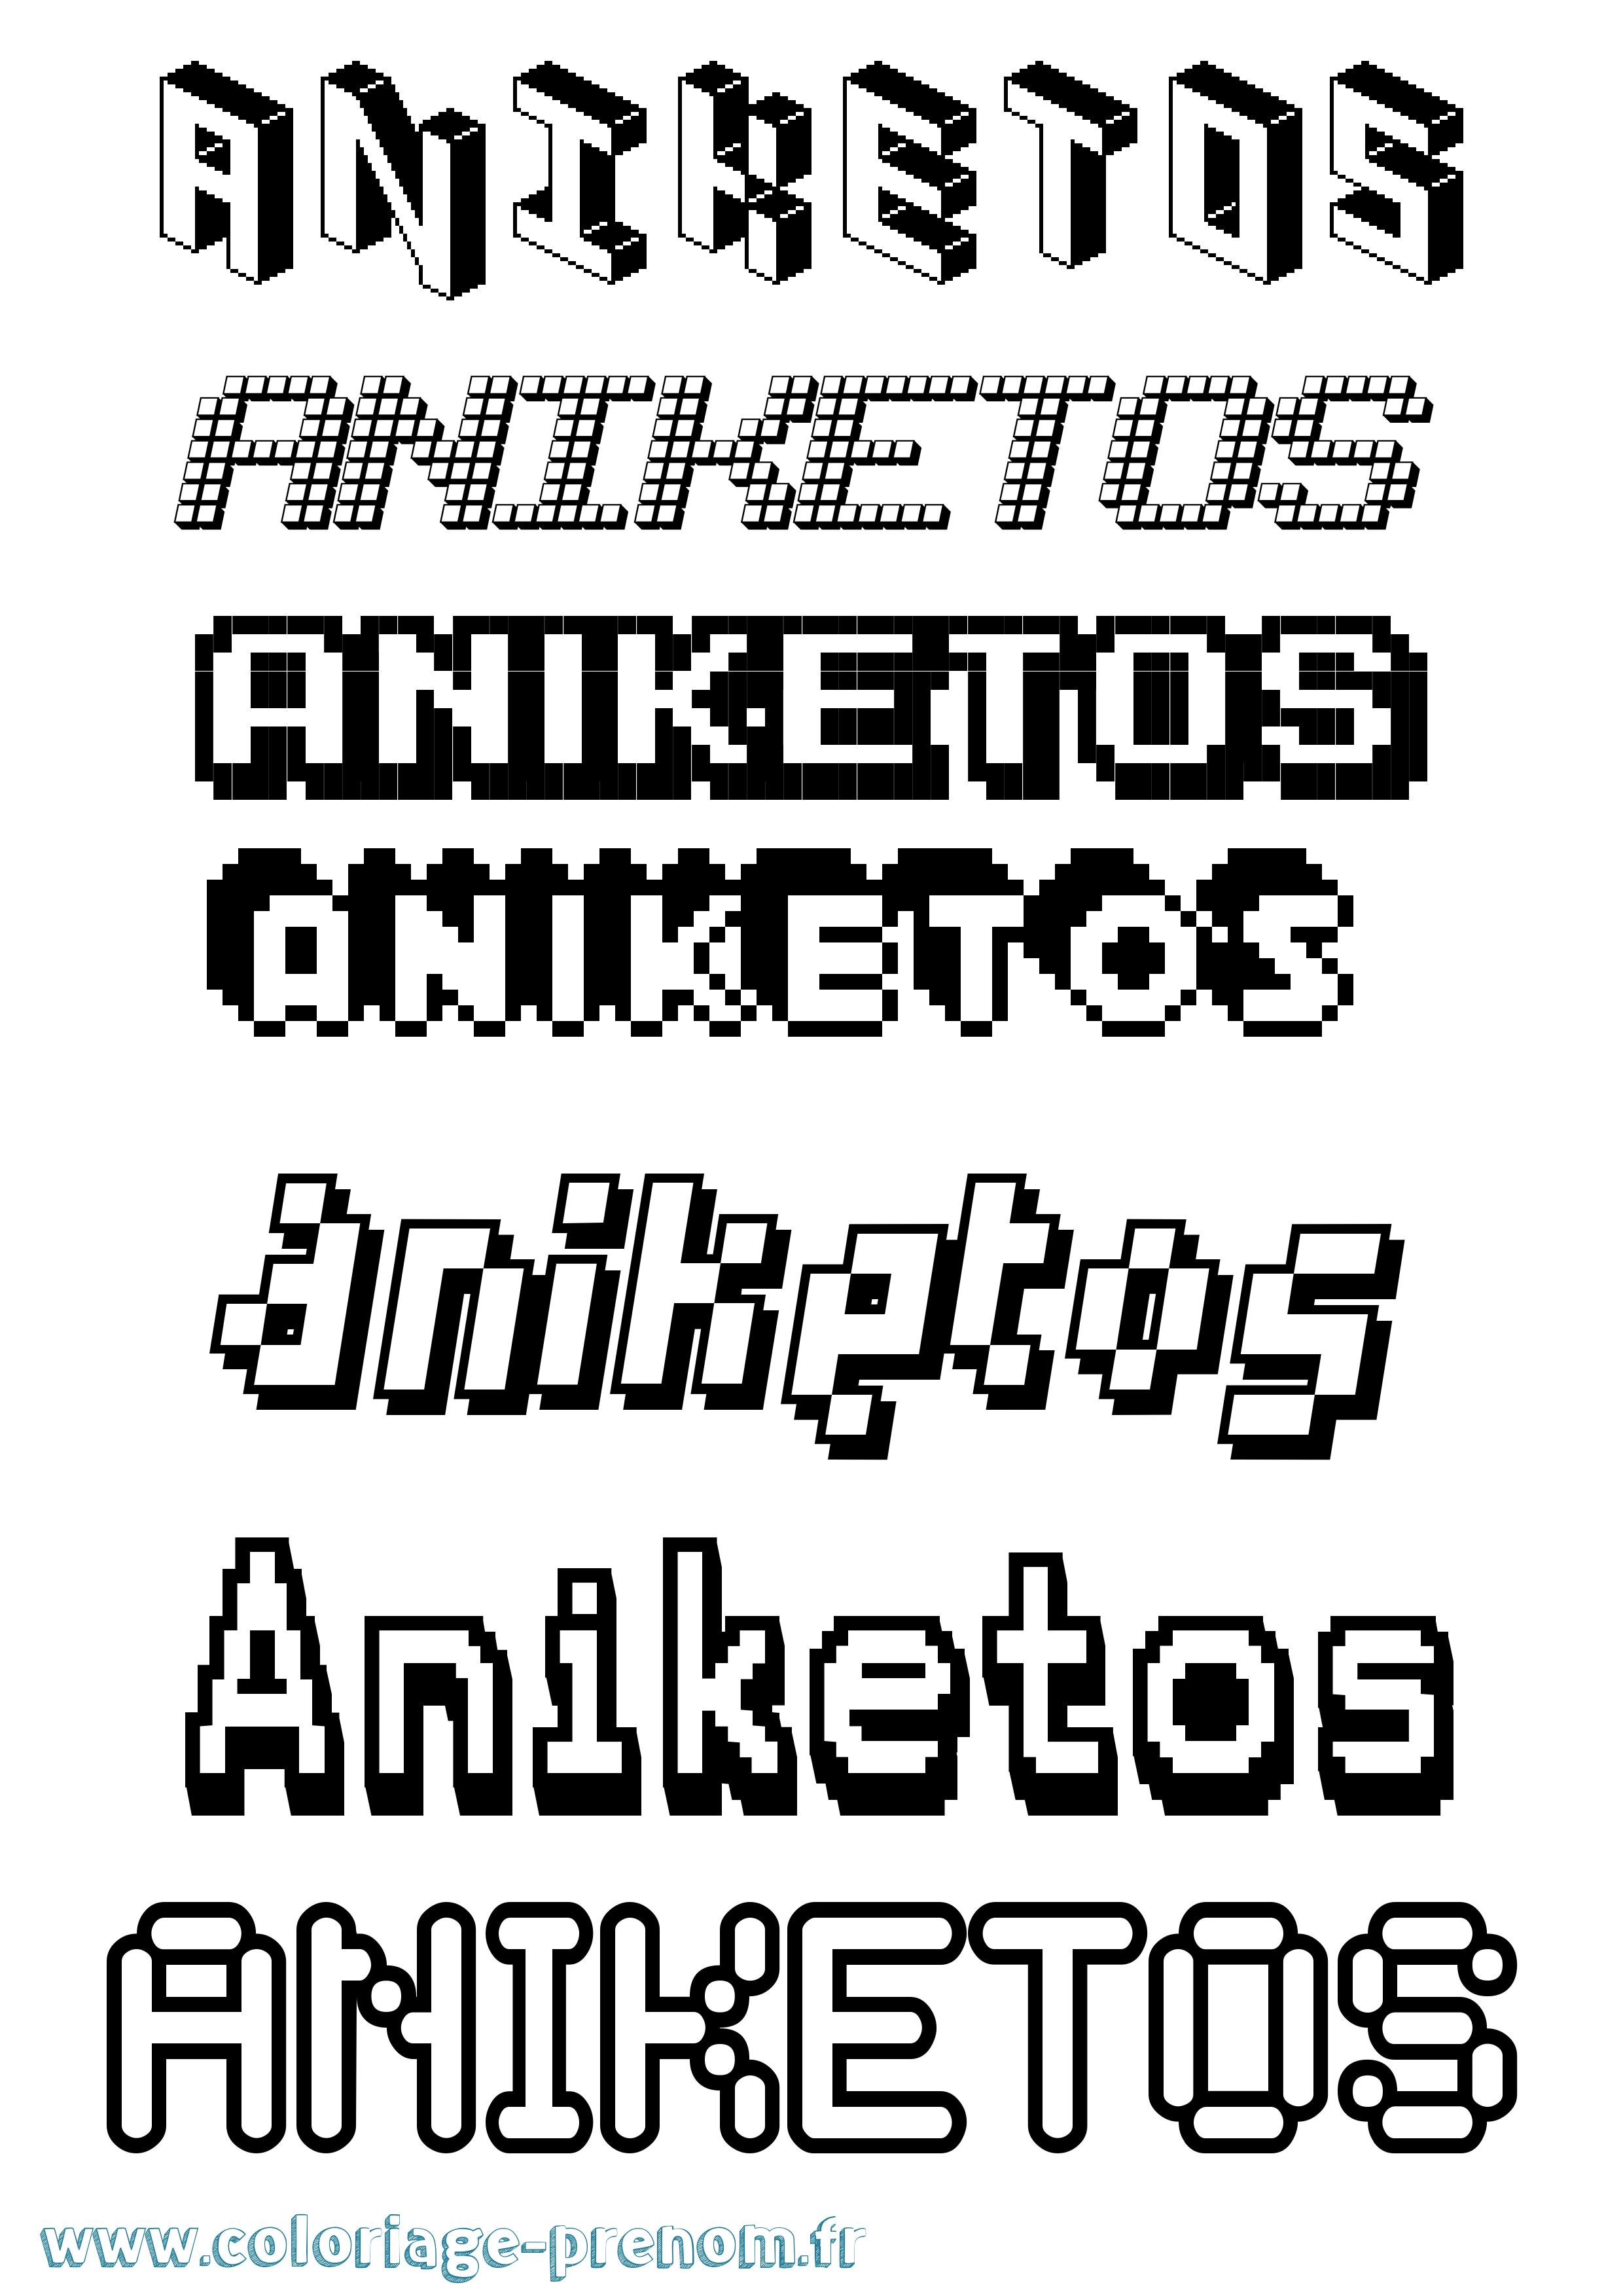 Coloriage prénom Aniketos Pixel